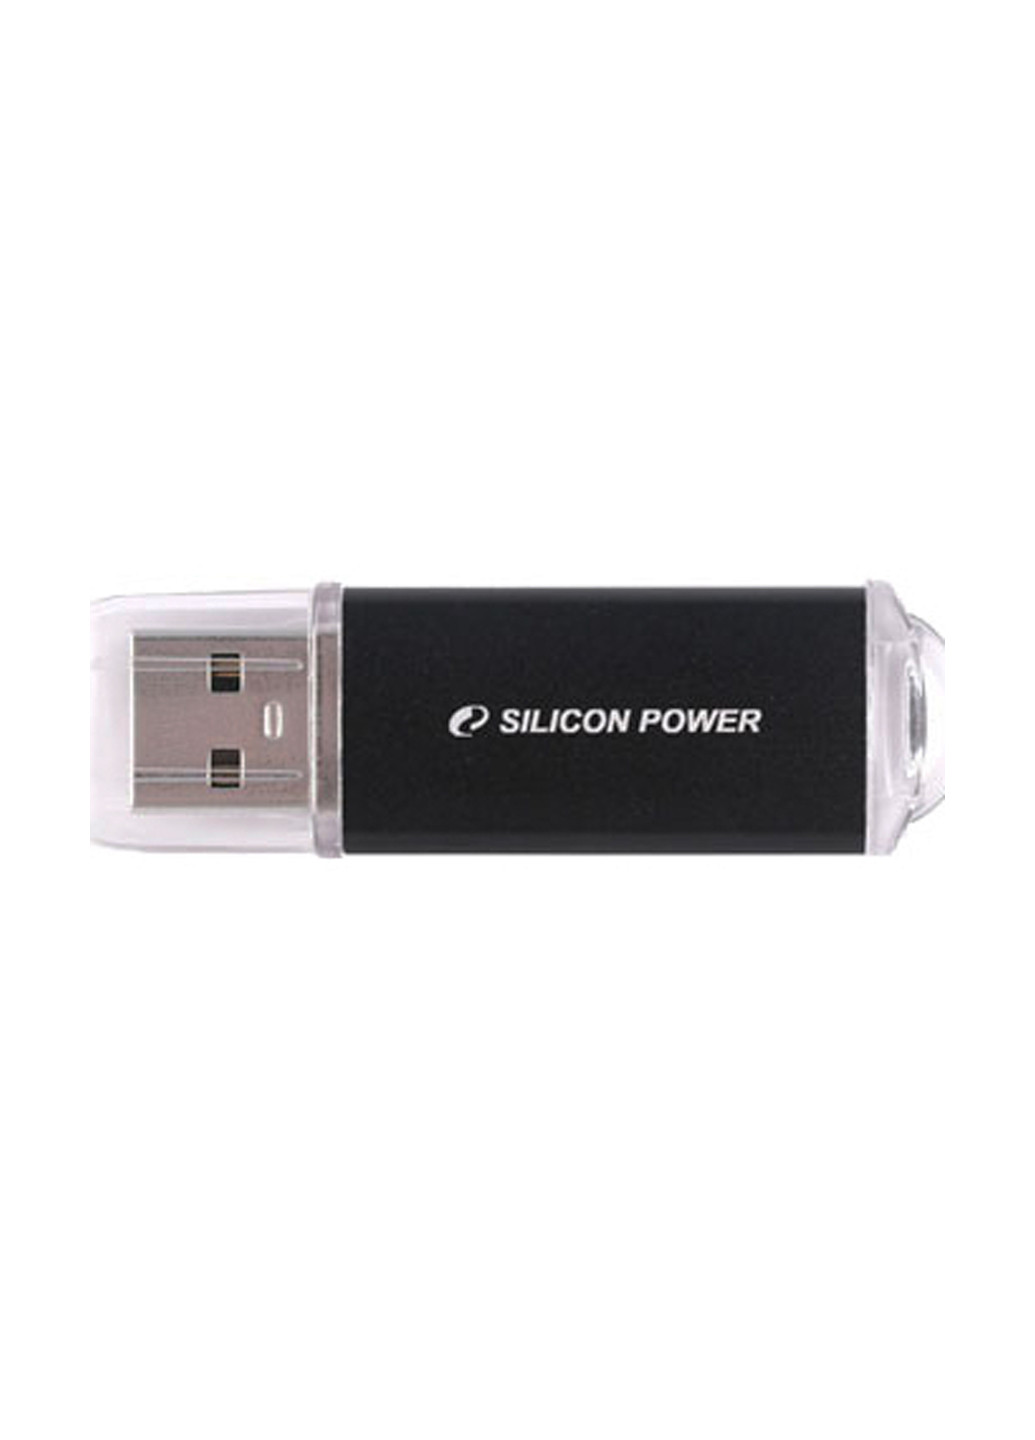 Флеш память USB Ultima II I-Series 8GB Black (SP008GBUF2M01V1K) Silicon Power флеш память usb silicon power ultima ii i-series 8gb black (sp008gbuf2m01v1k) (132824596)